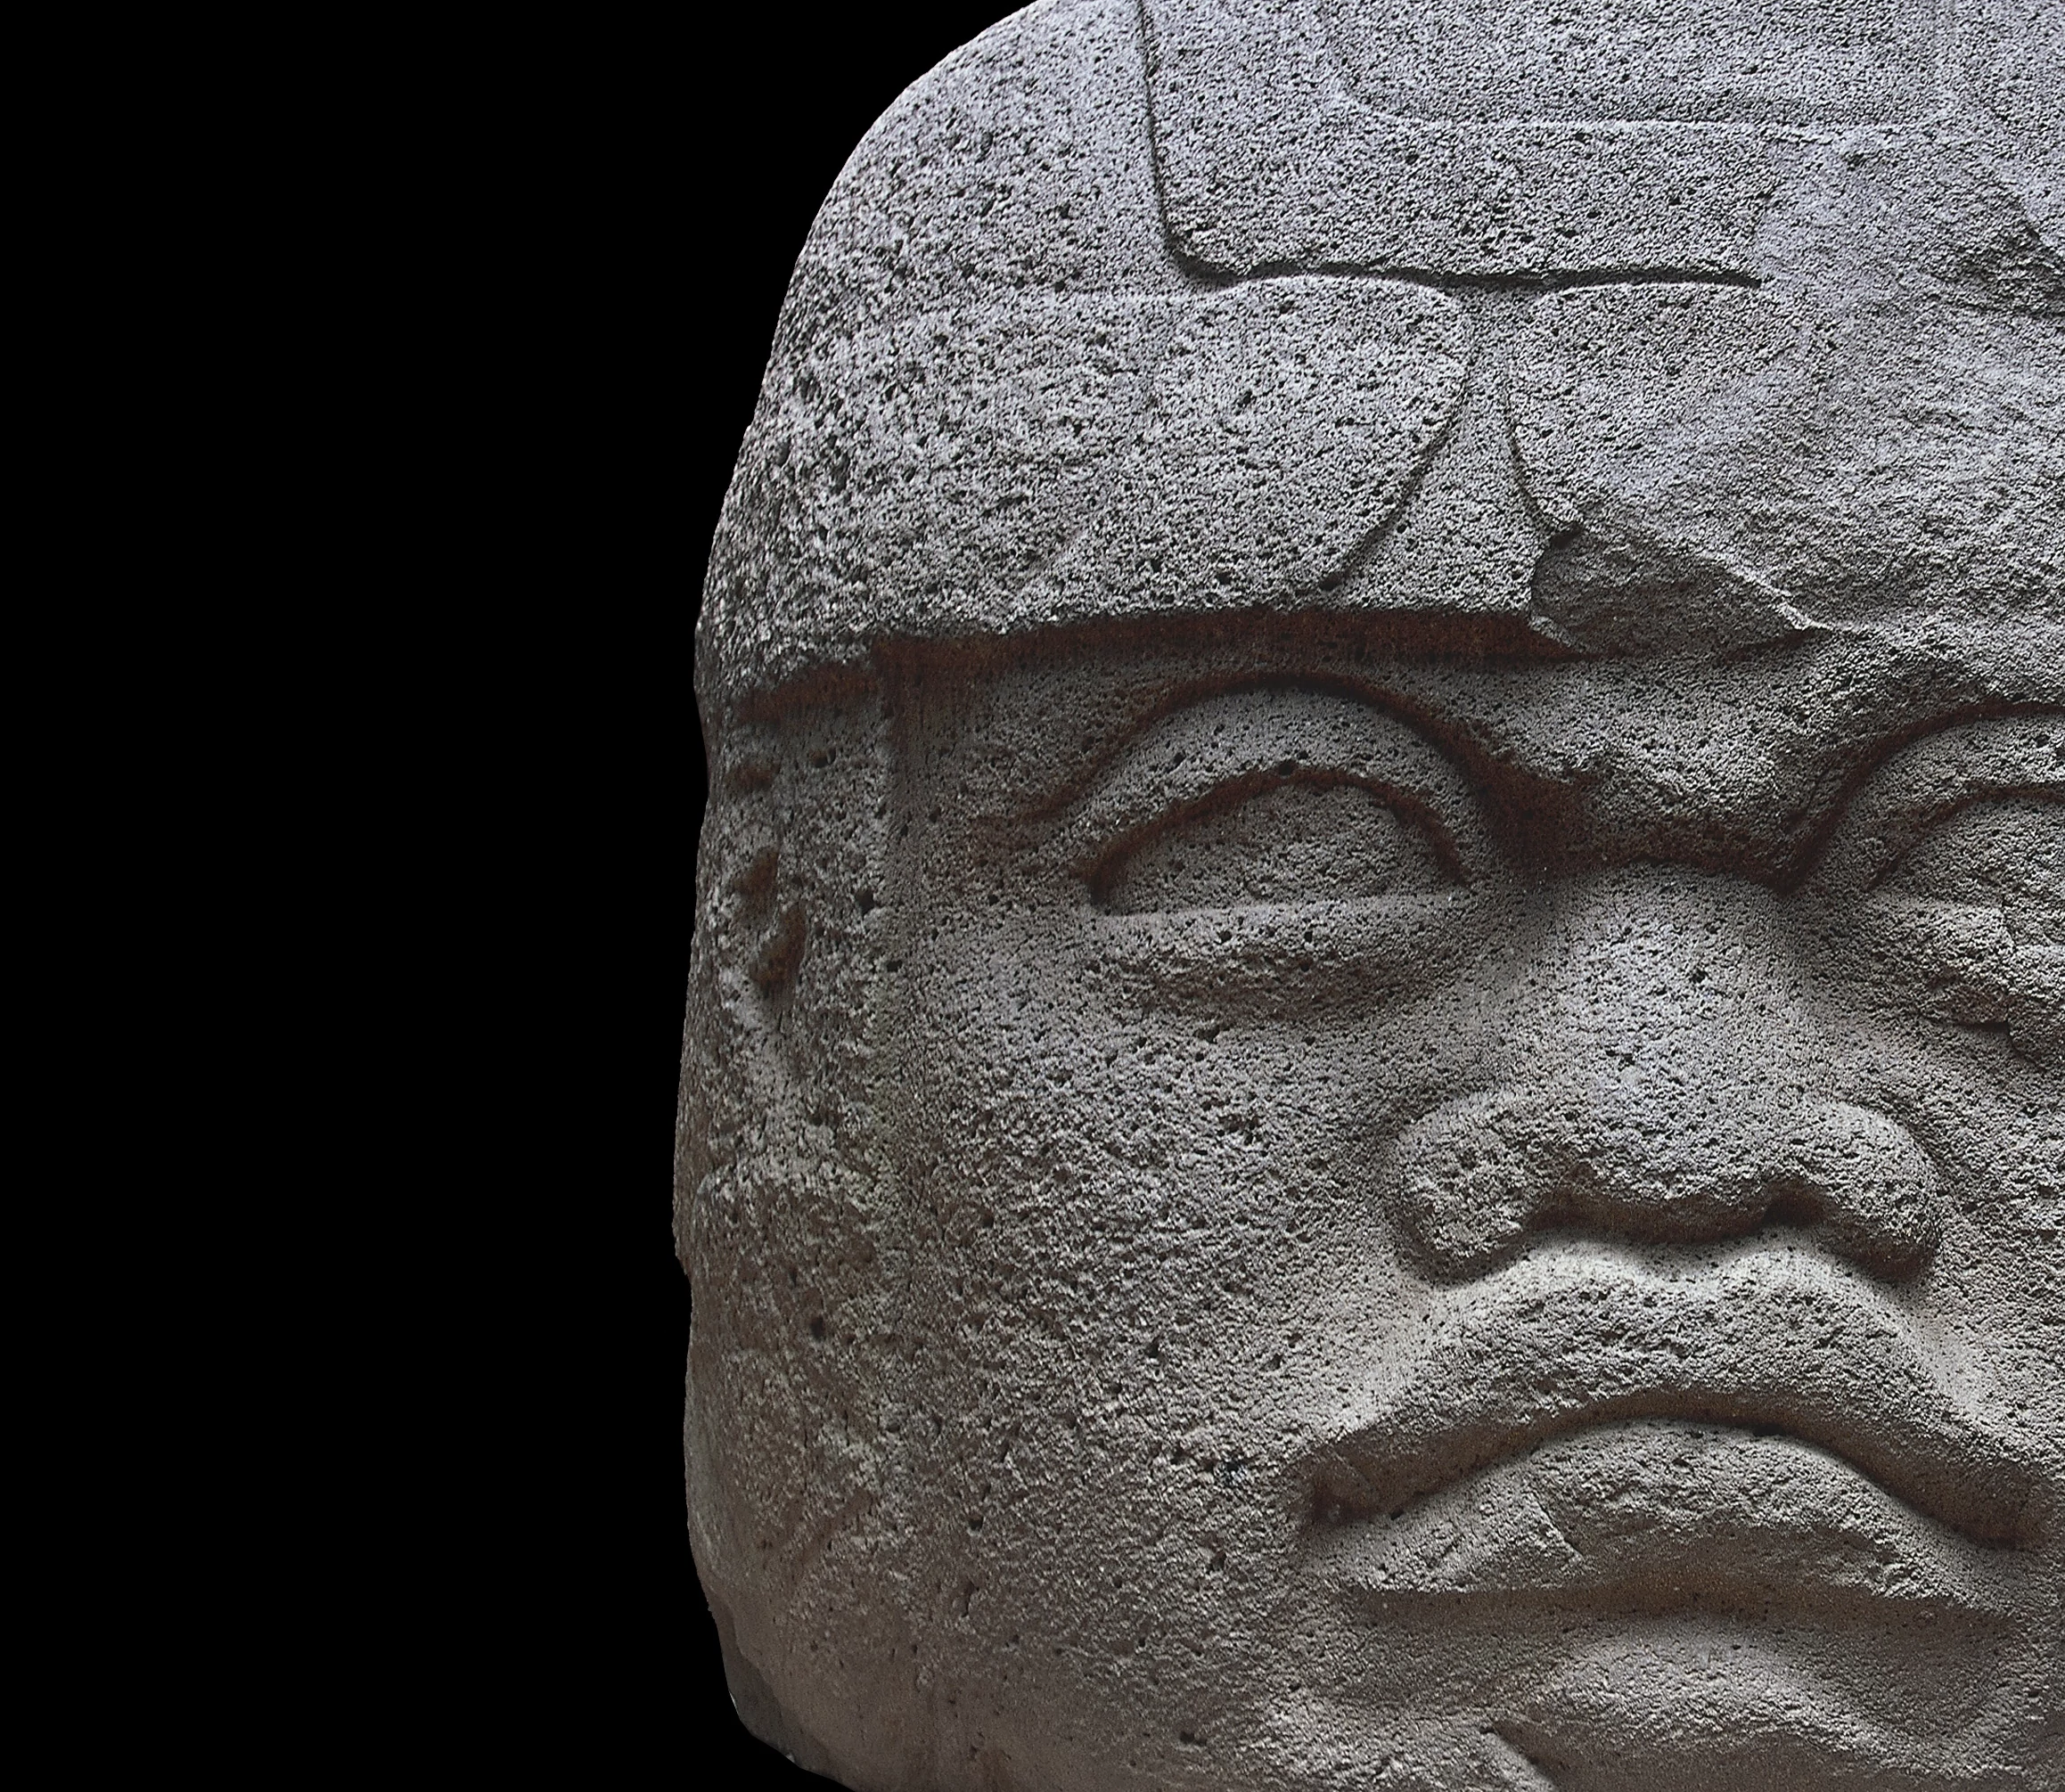 Olmec Civilization, Ancient World